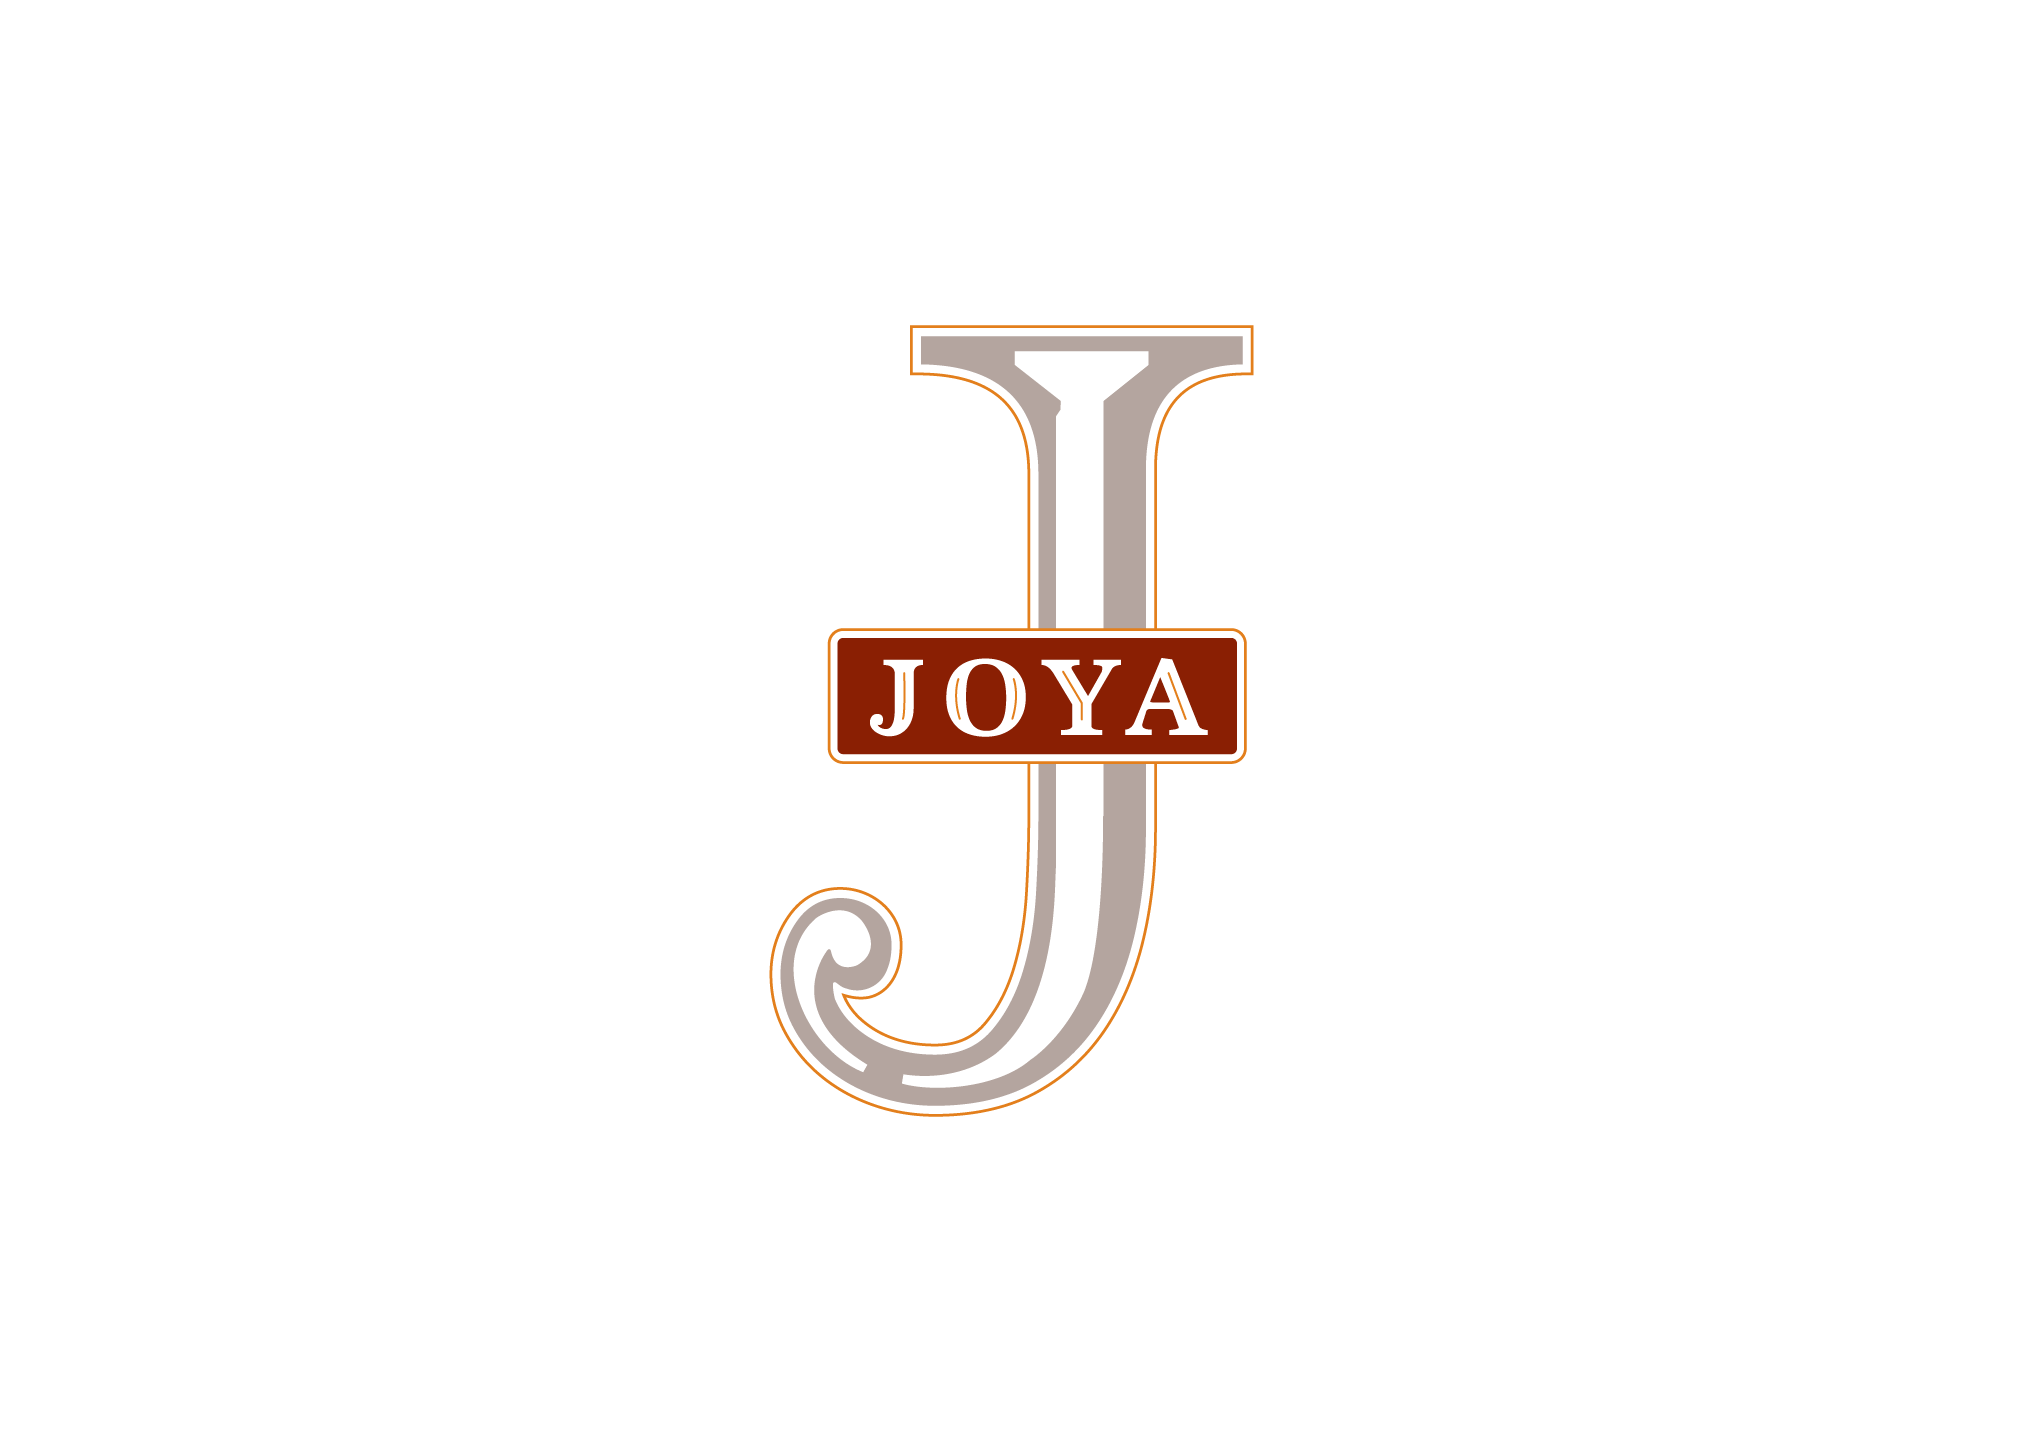 Joya J logo on white.png